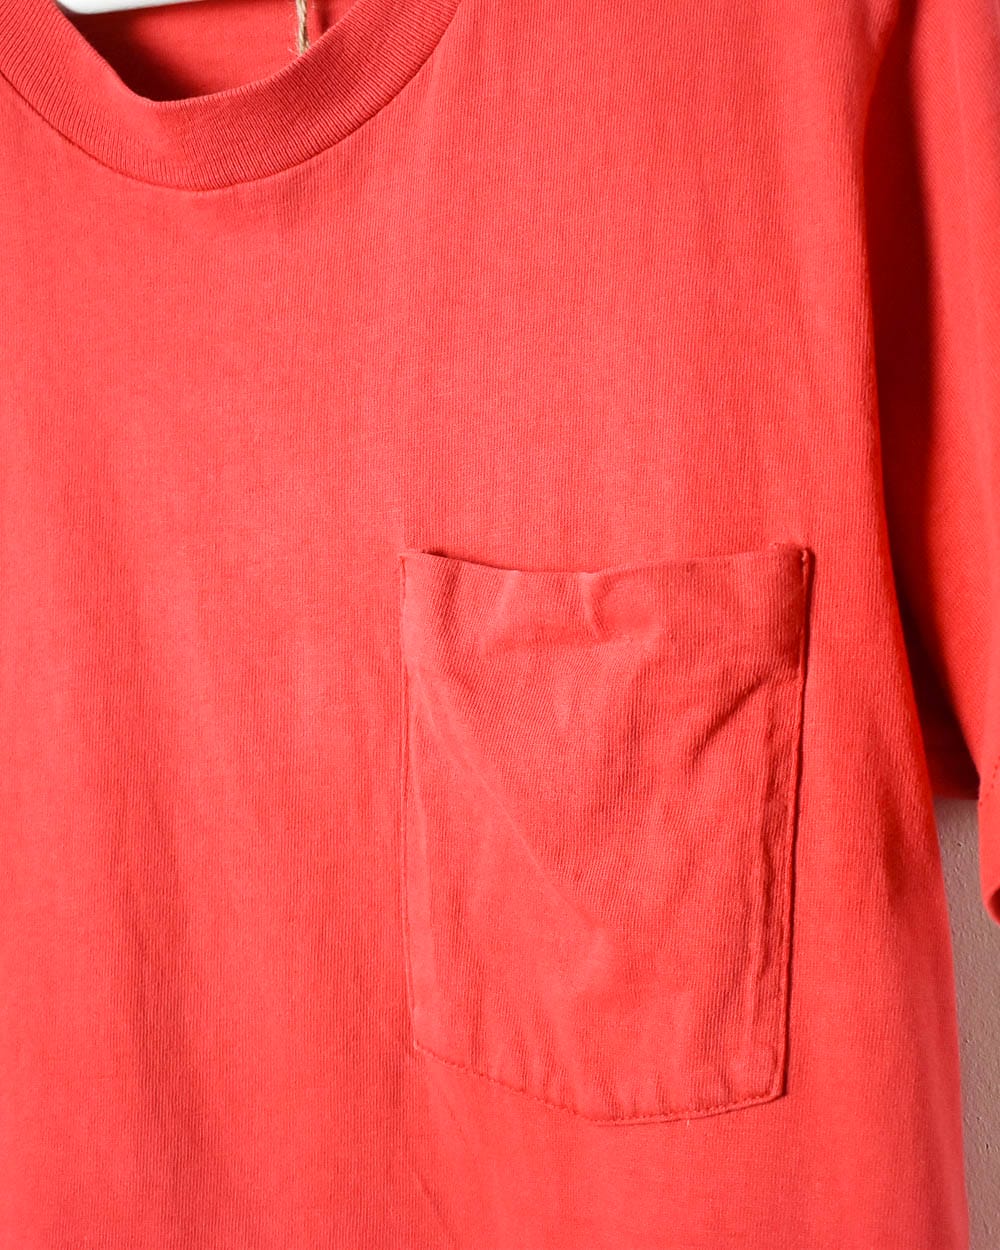 Red Blank Single Stitch T-Shirt - Small